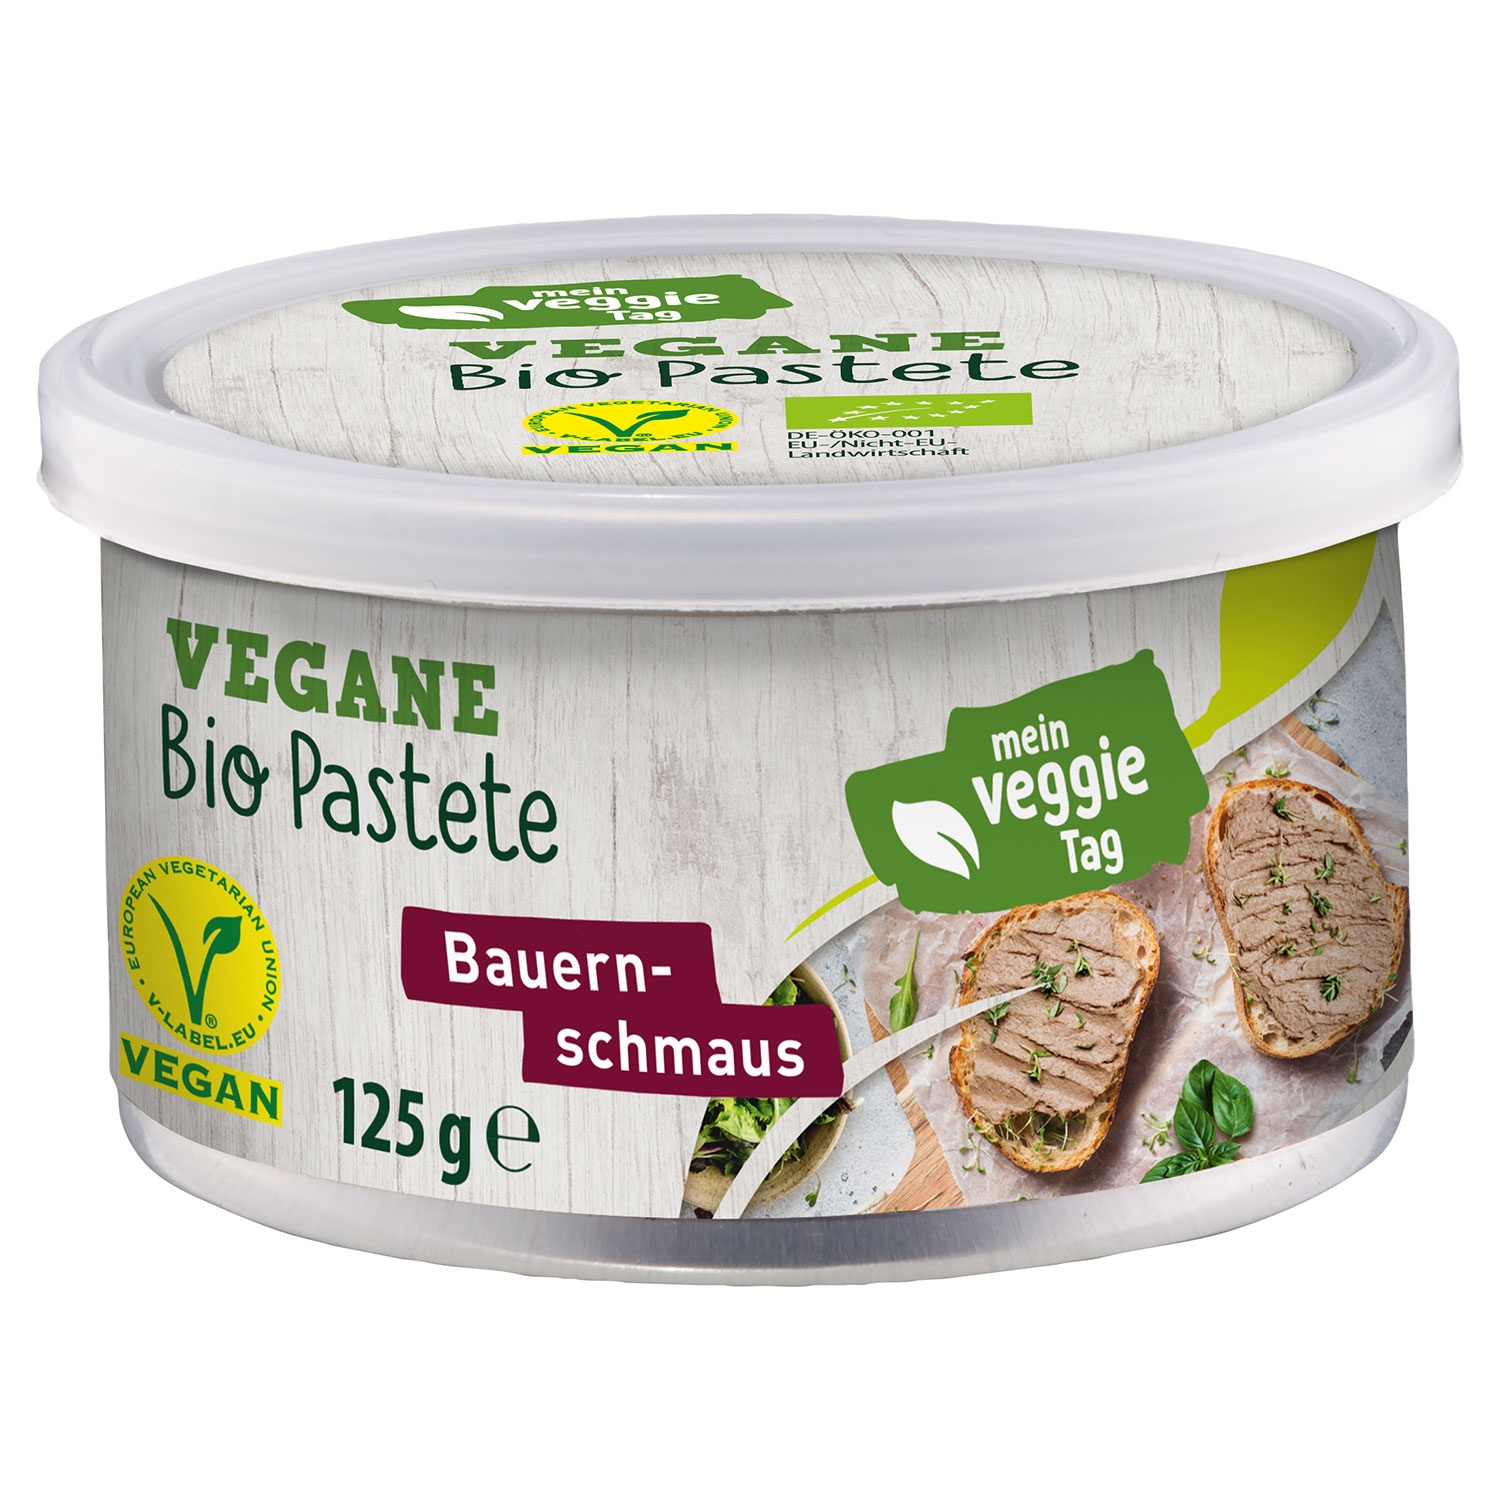 MEIN VEGGIE TAG Vegane Bio-Pastete 125 g